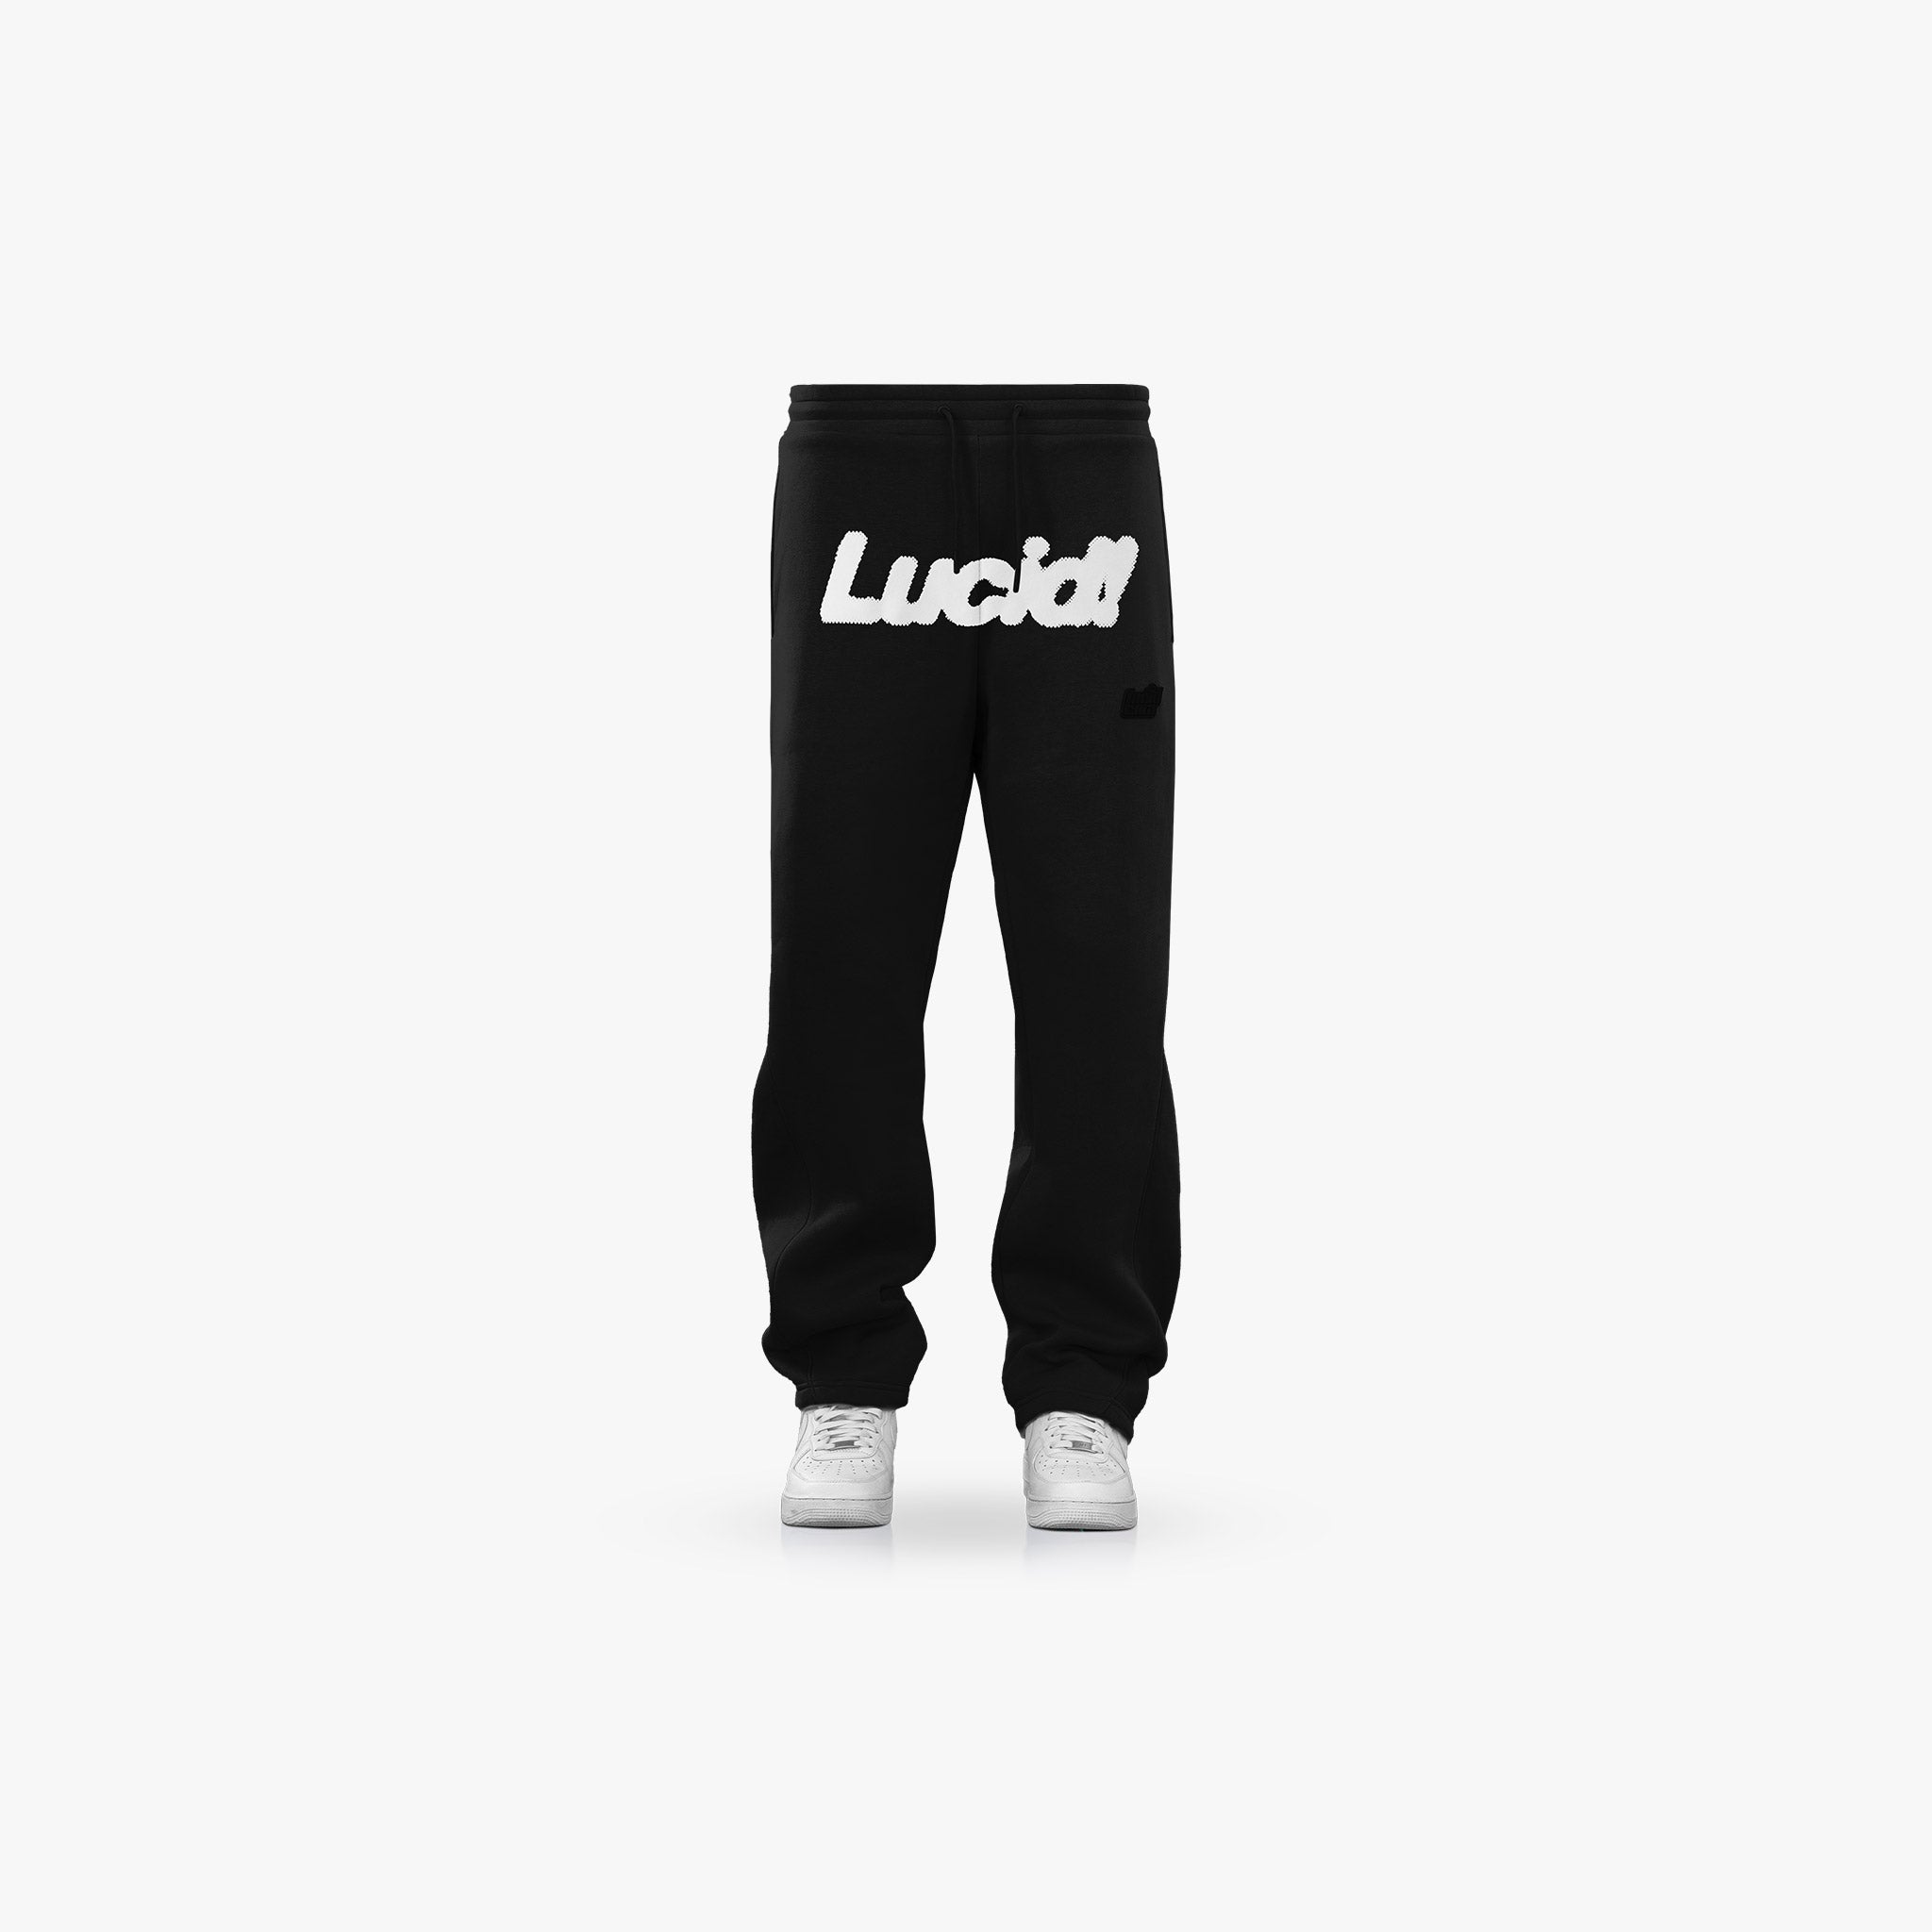 Lucid! Sweatpants Black/White